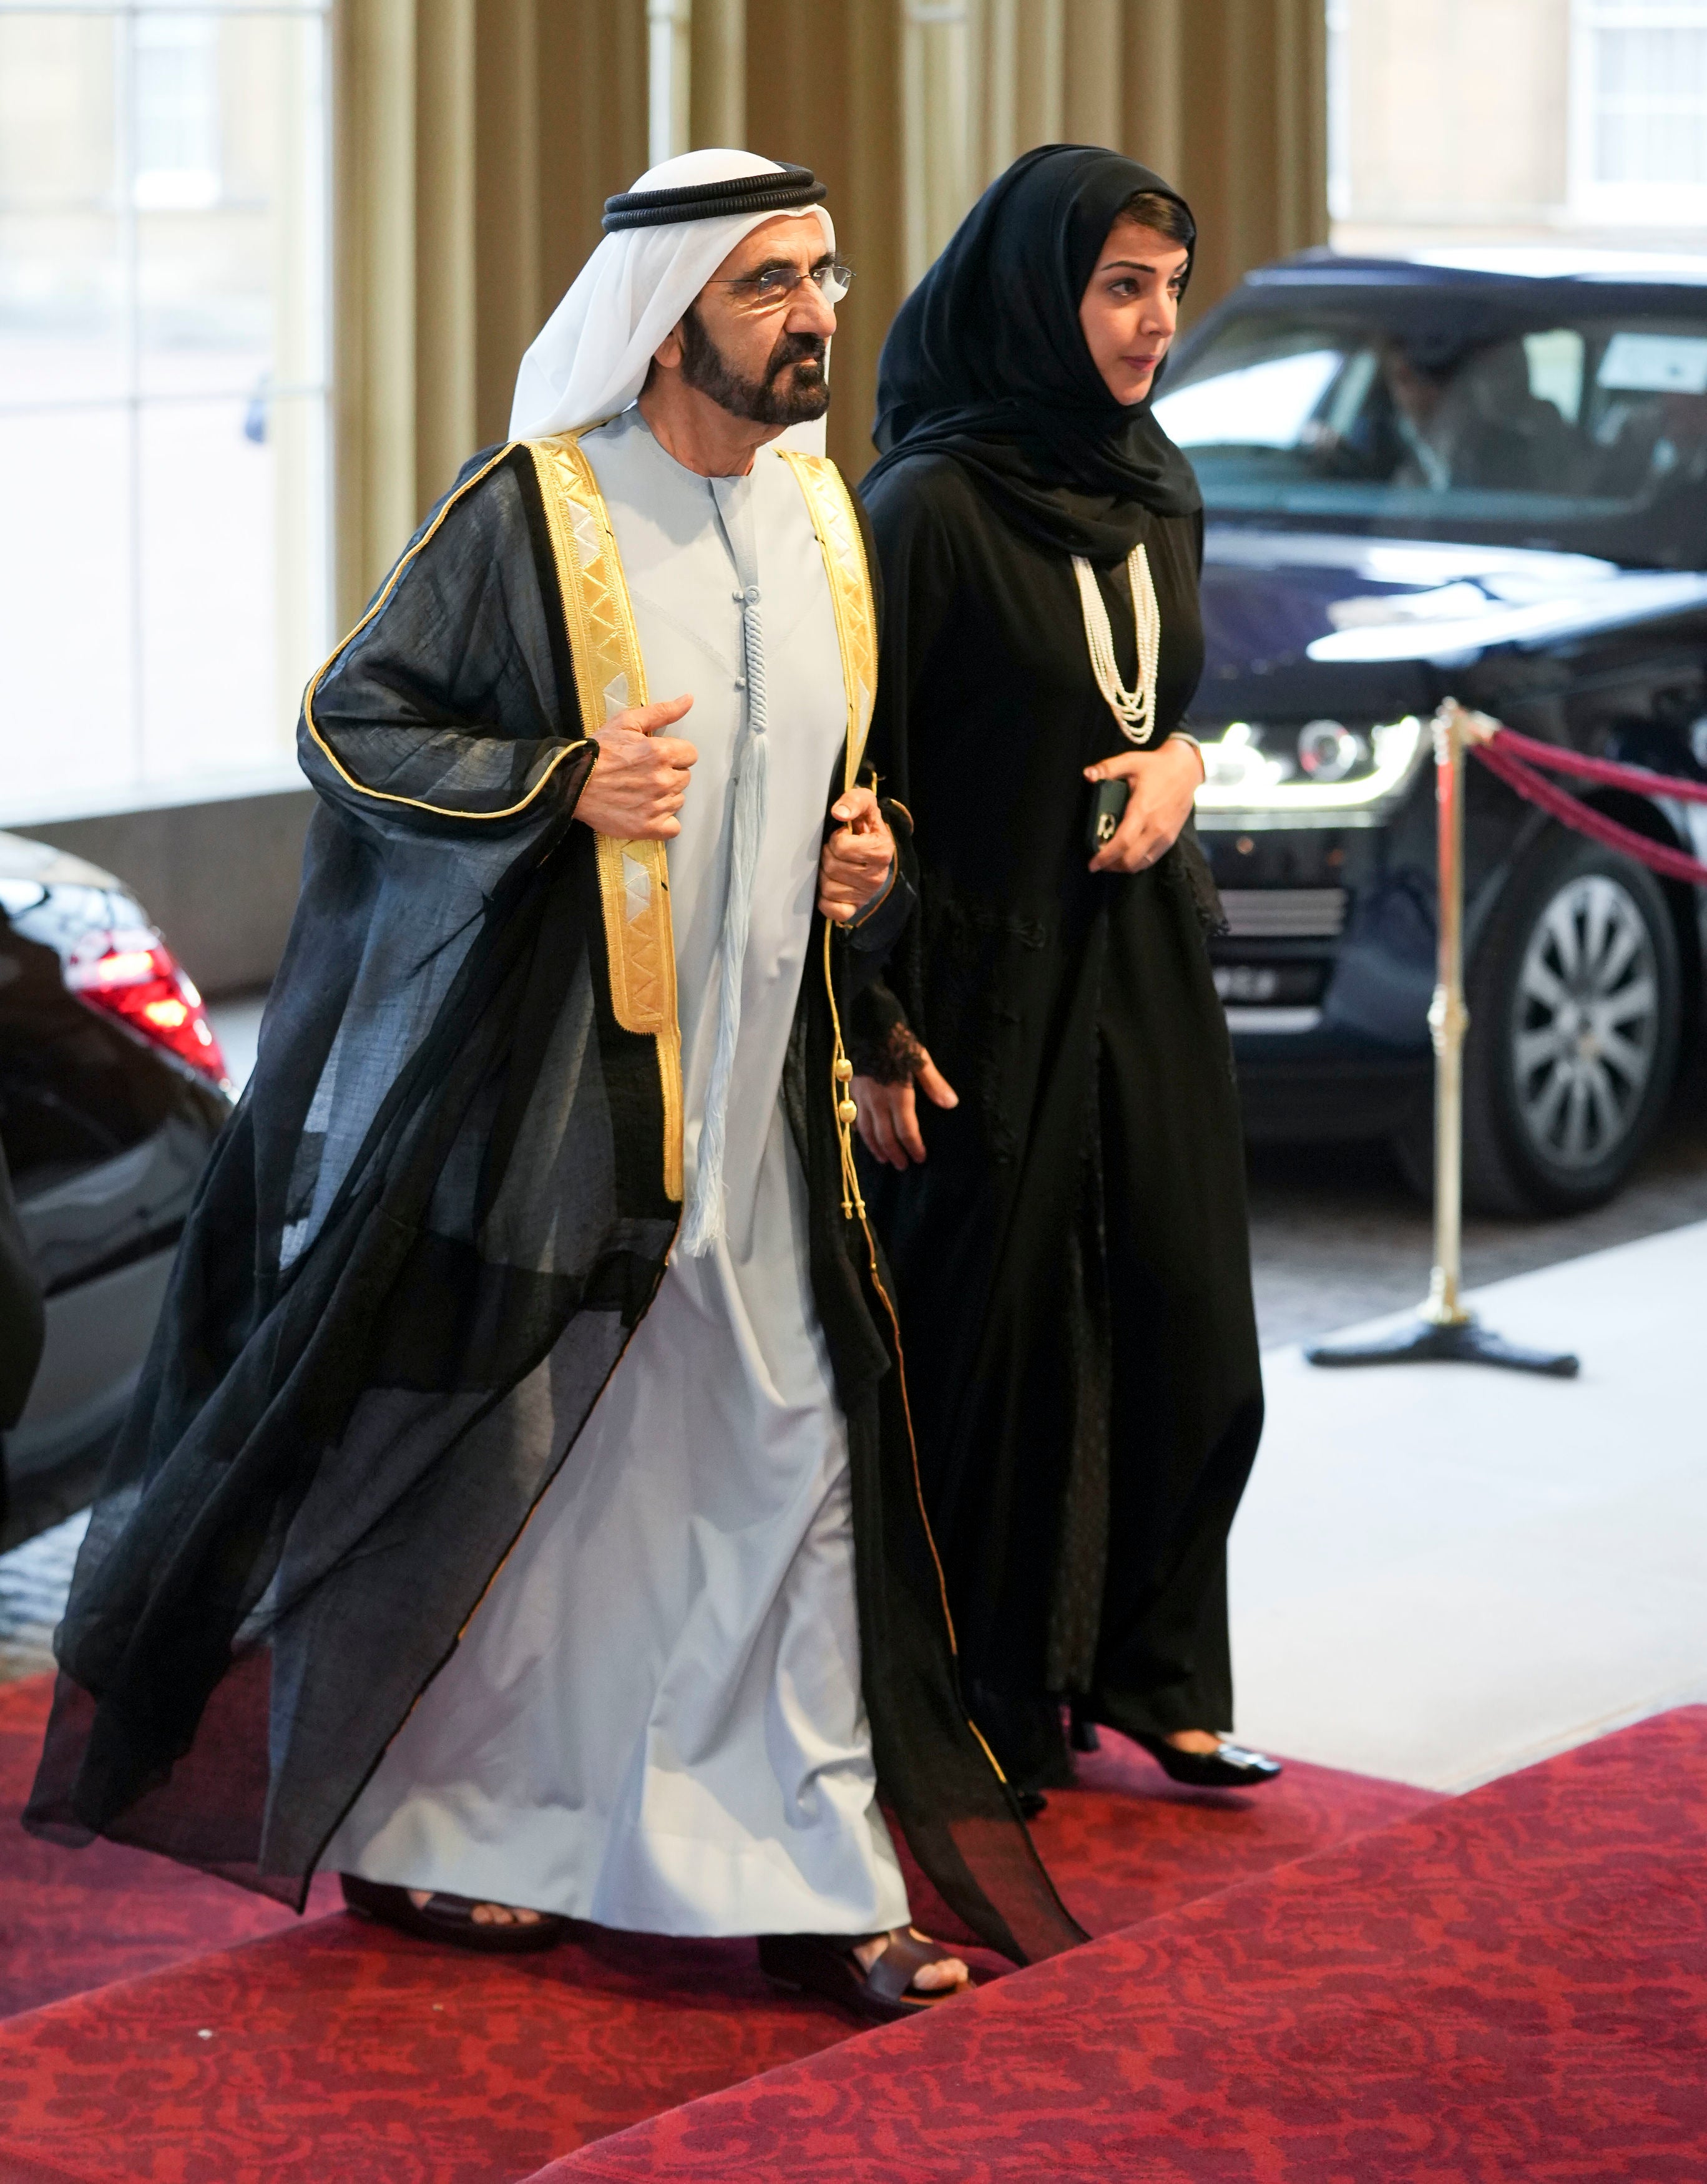 El jeque Mohammed bin Rashid Al Maktoum